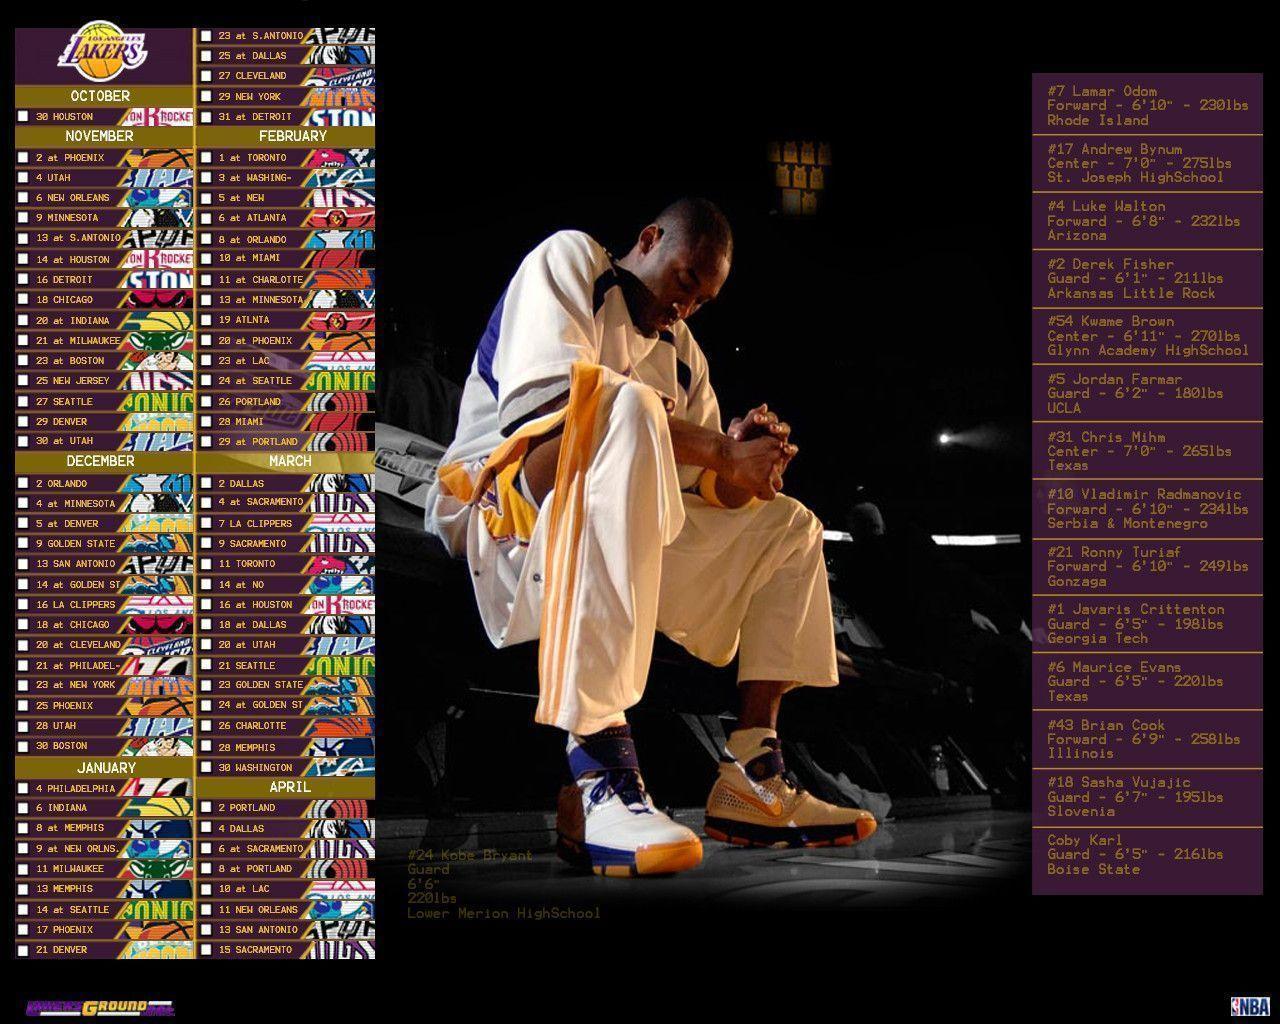 Lakers Wallpaper Schedule 07081280x1024 (7 Comments)